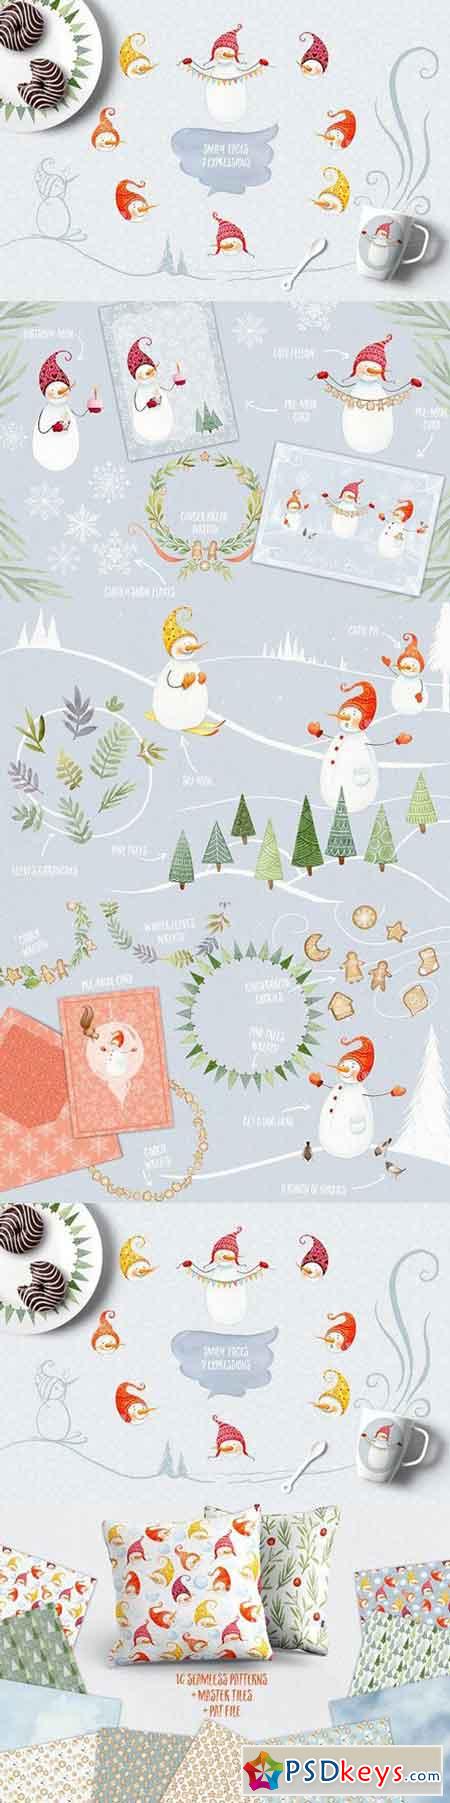 The Snowmen- winter watercolors 1017583